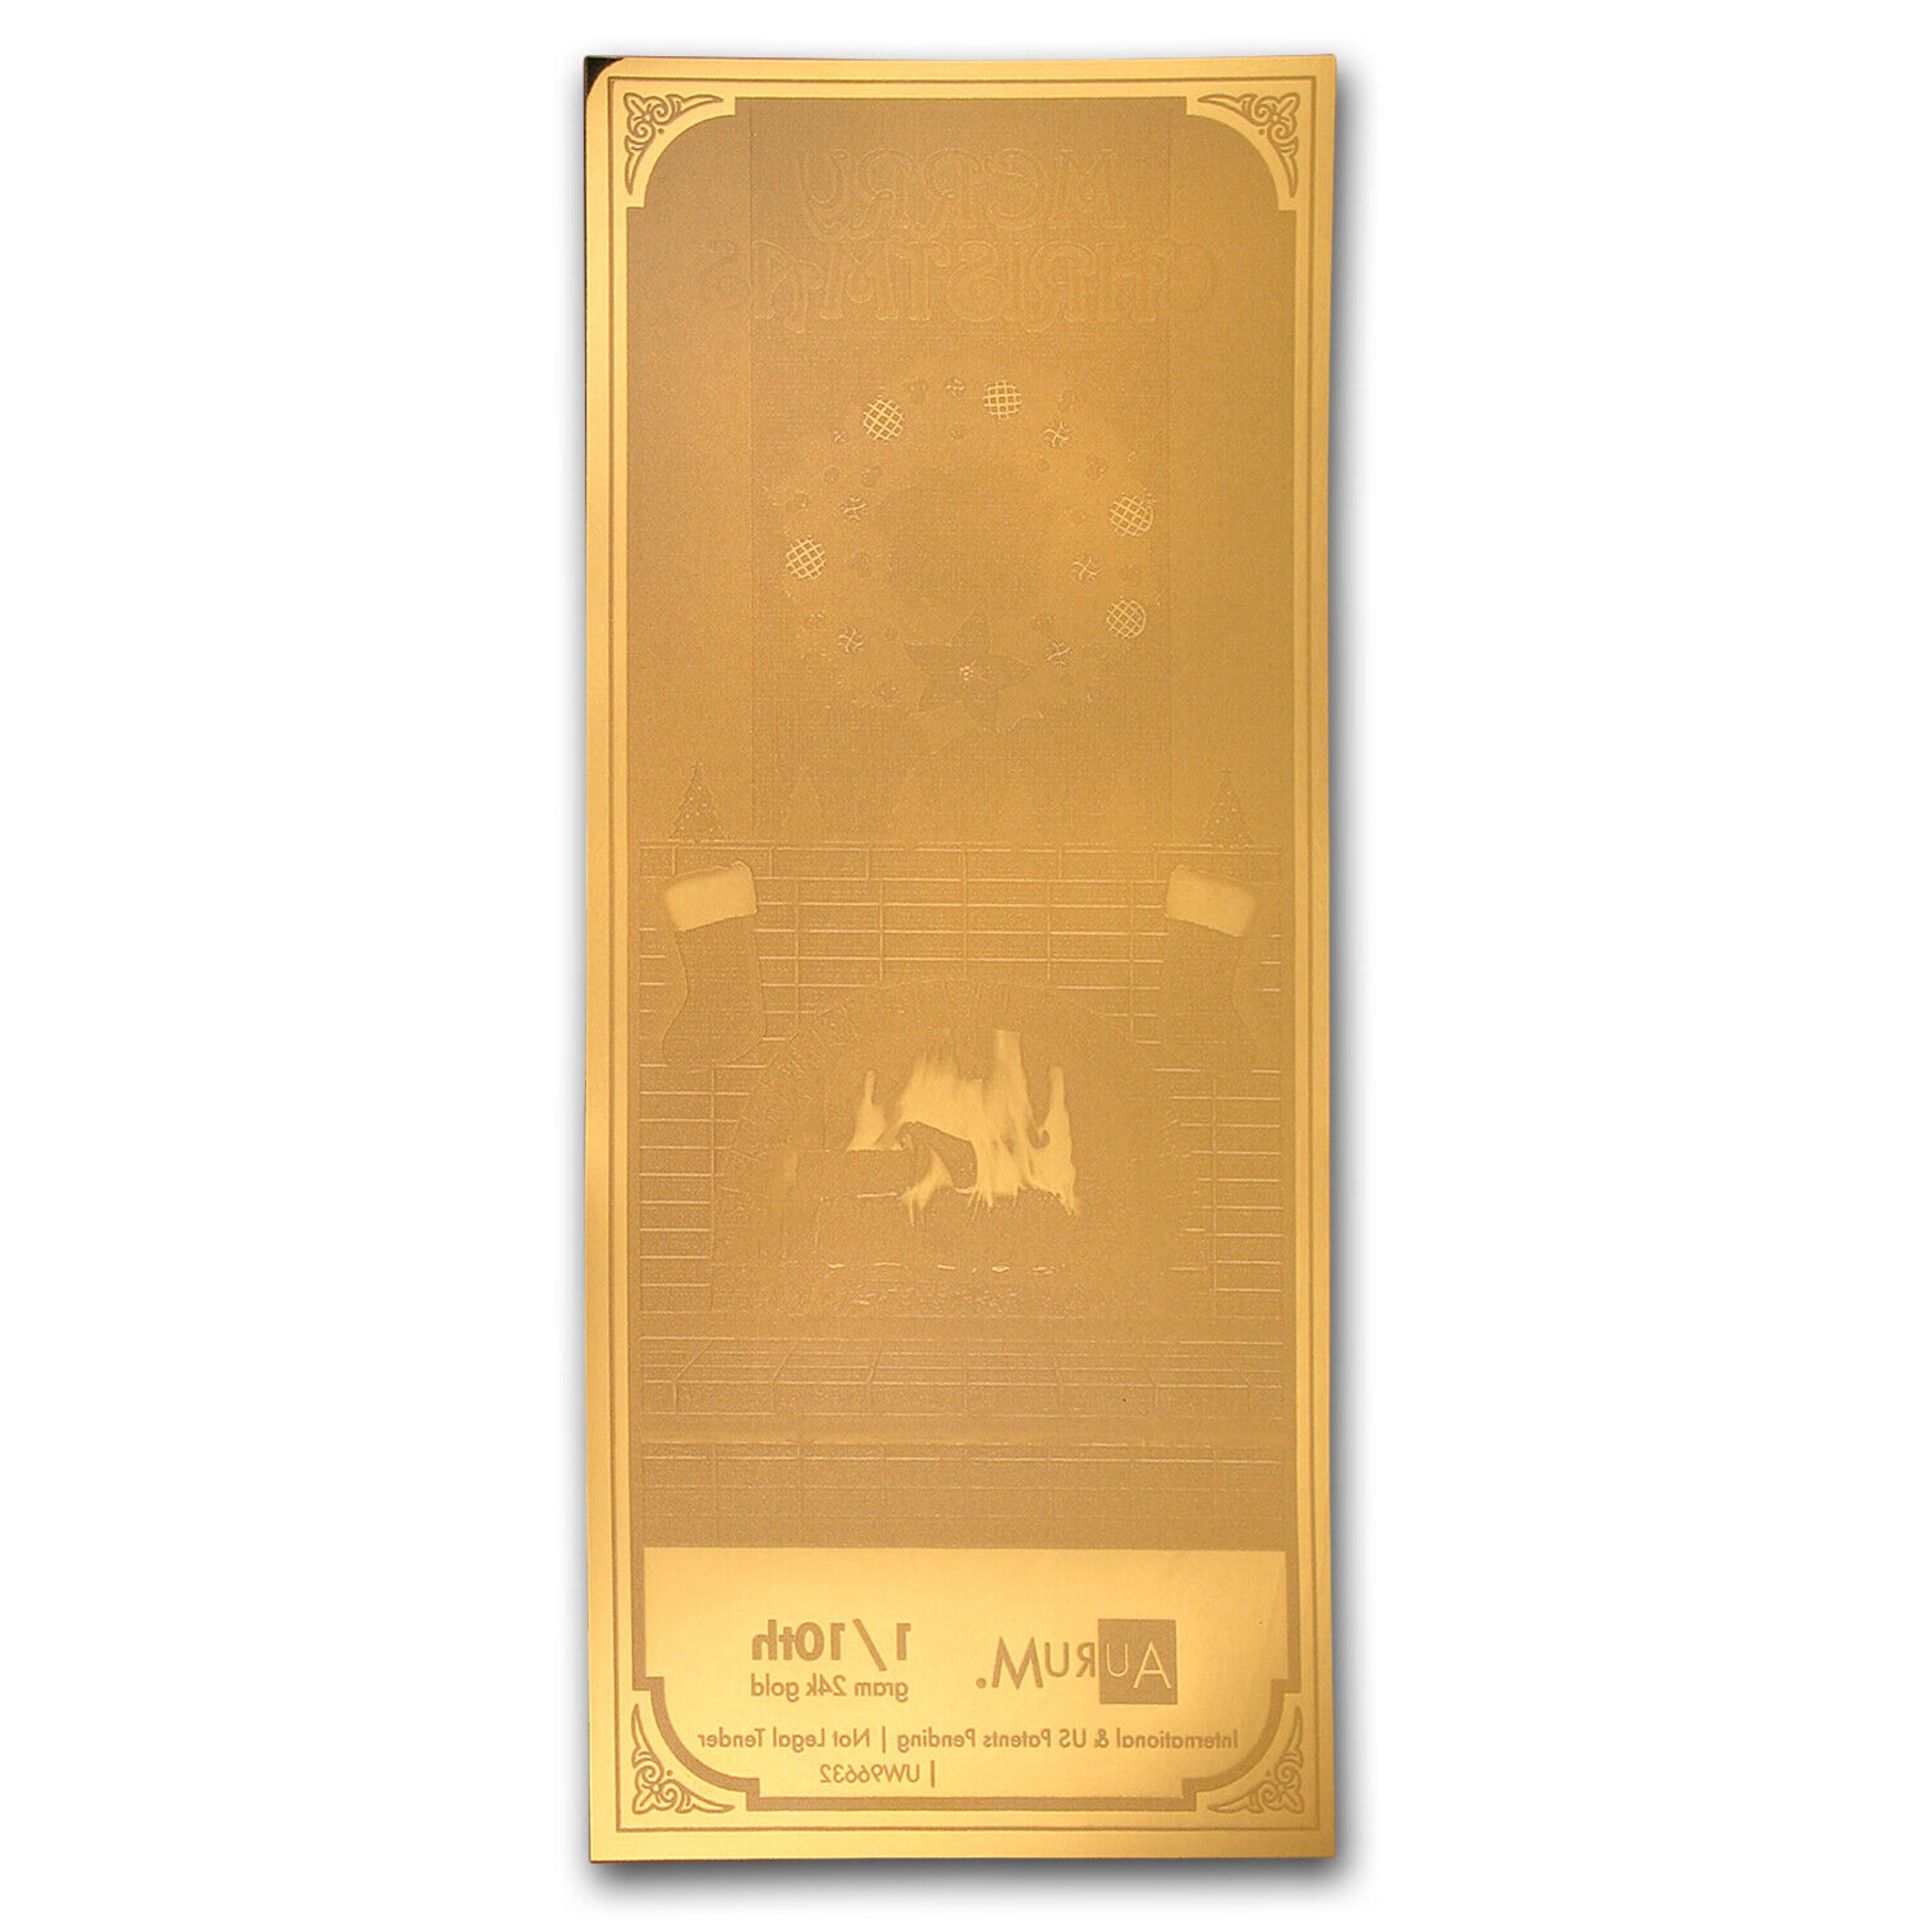 1/10 gram Gold Aurum Note - Merry Christmas - Fireplace, 24K - Image 2 of 2